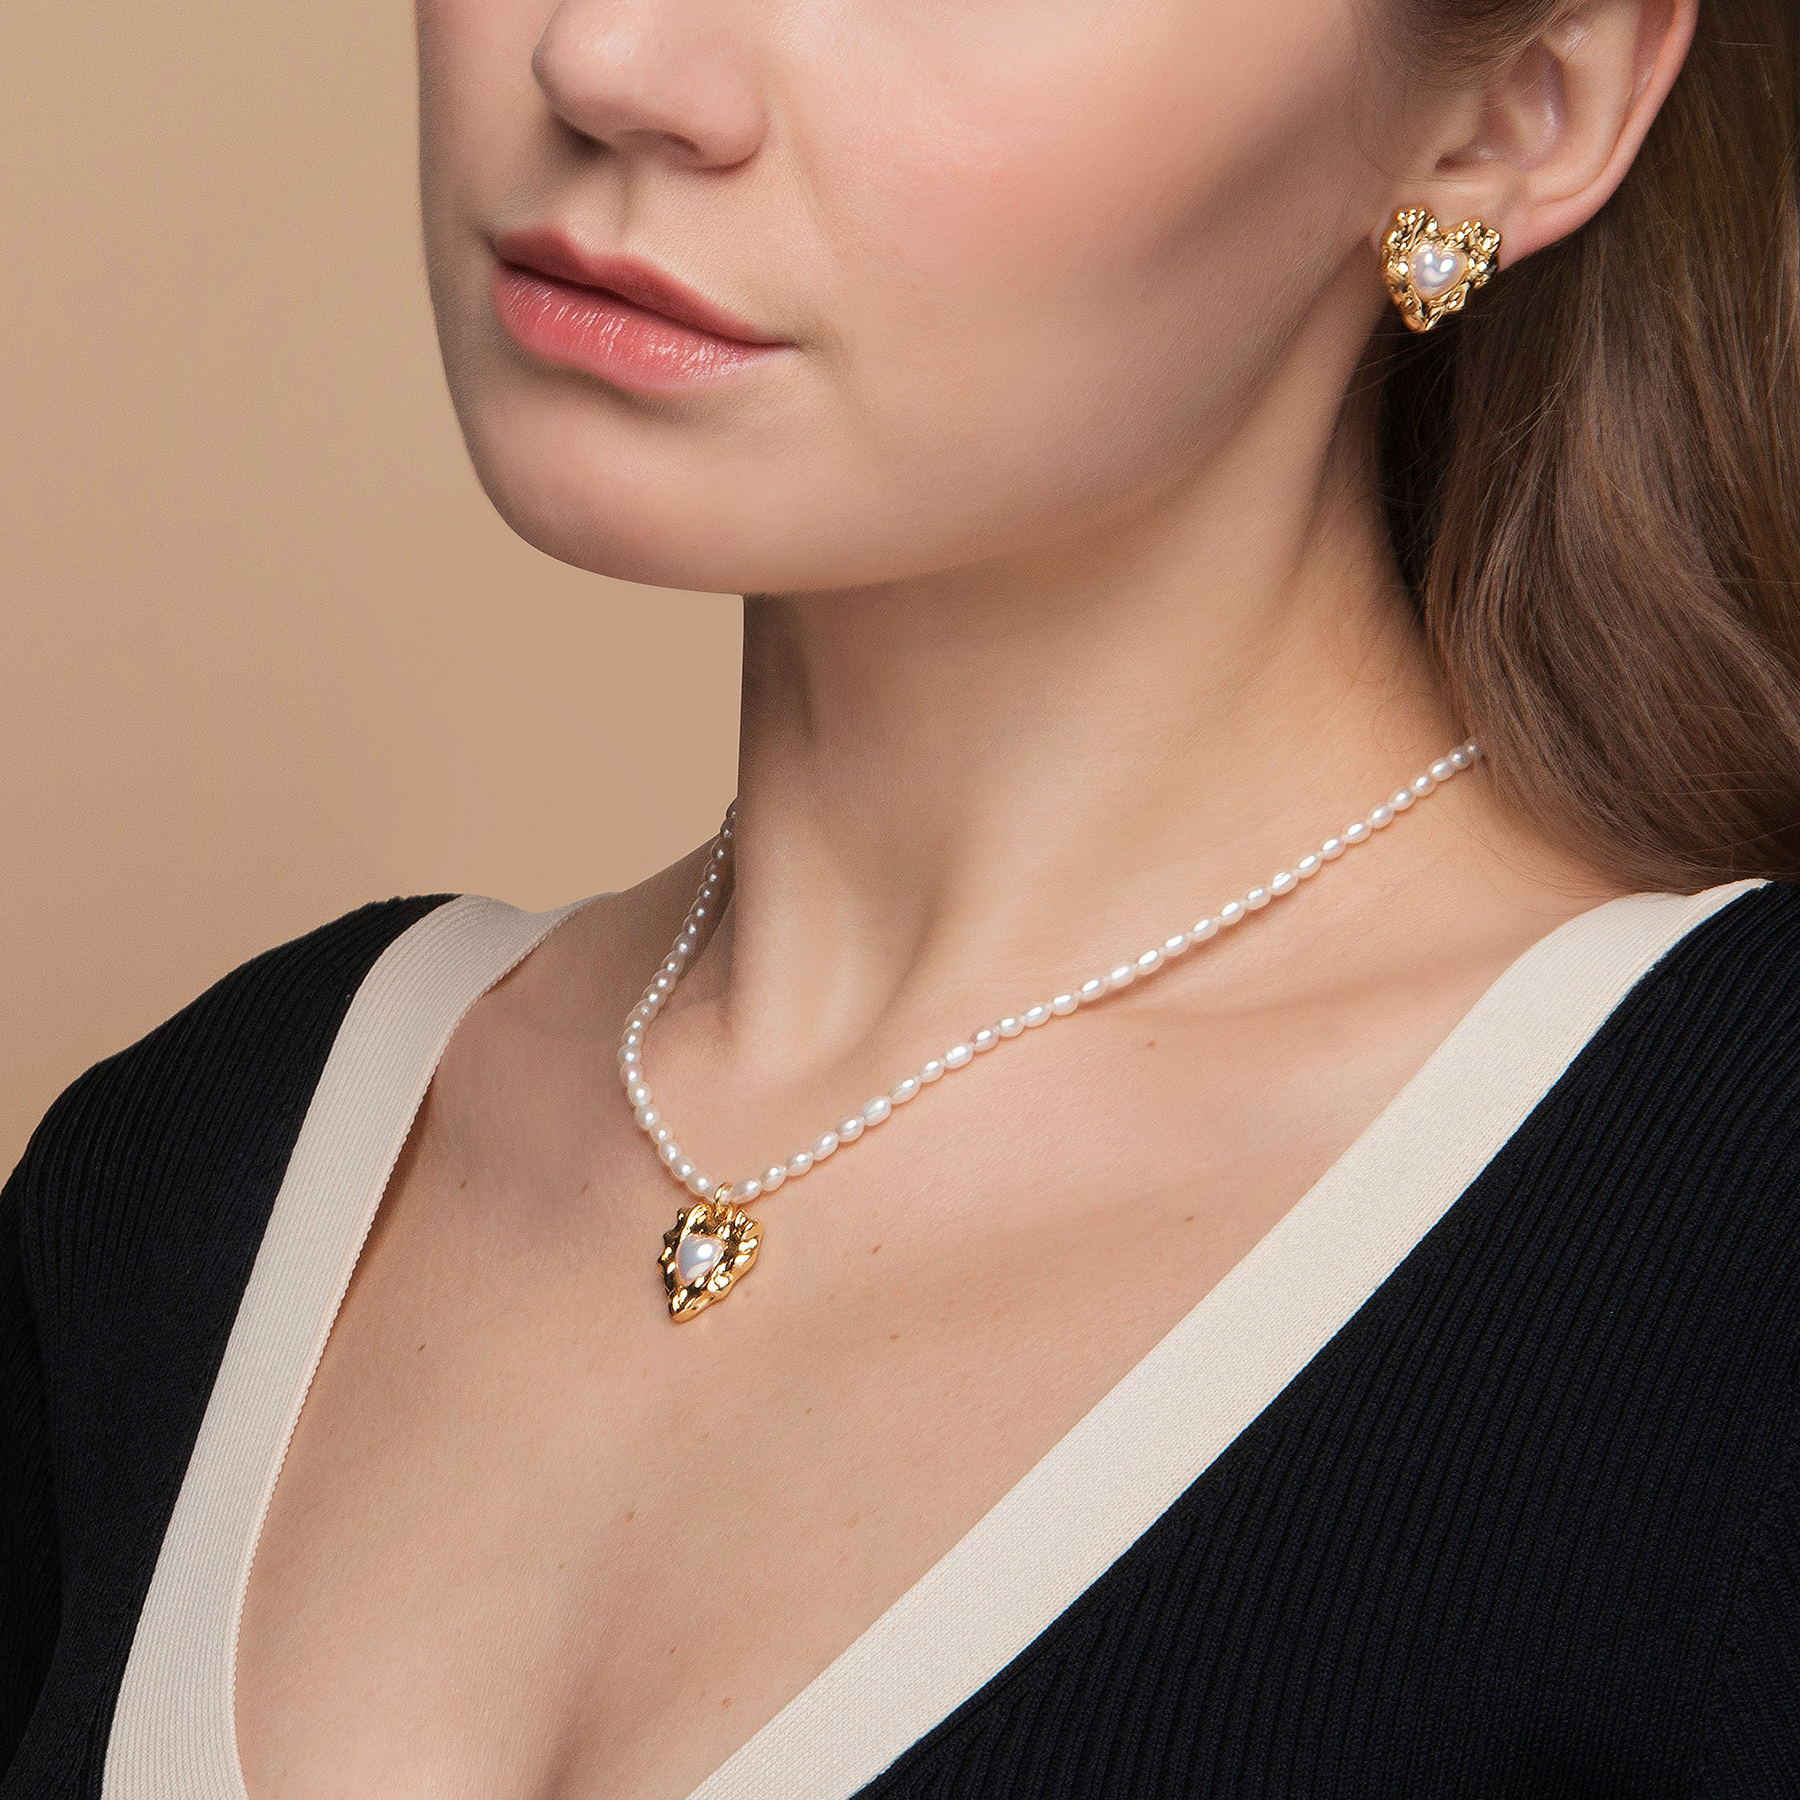 QM – 18k Gold Plated Heart Shape Pearl Stud Earrings